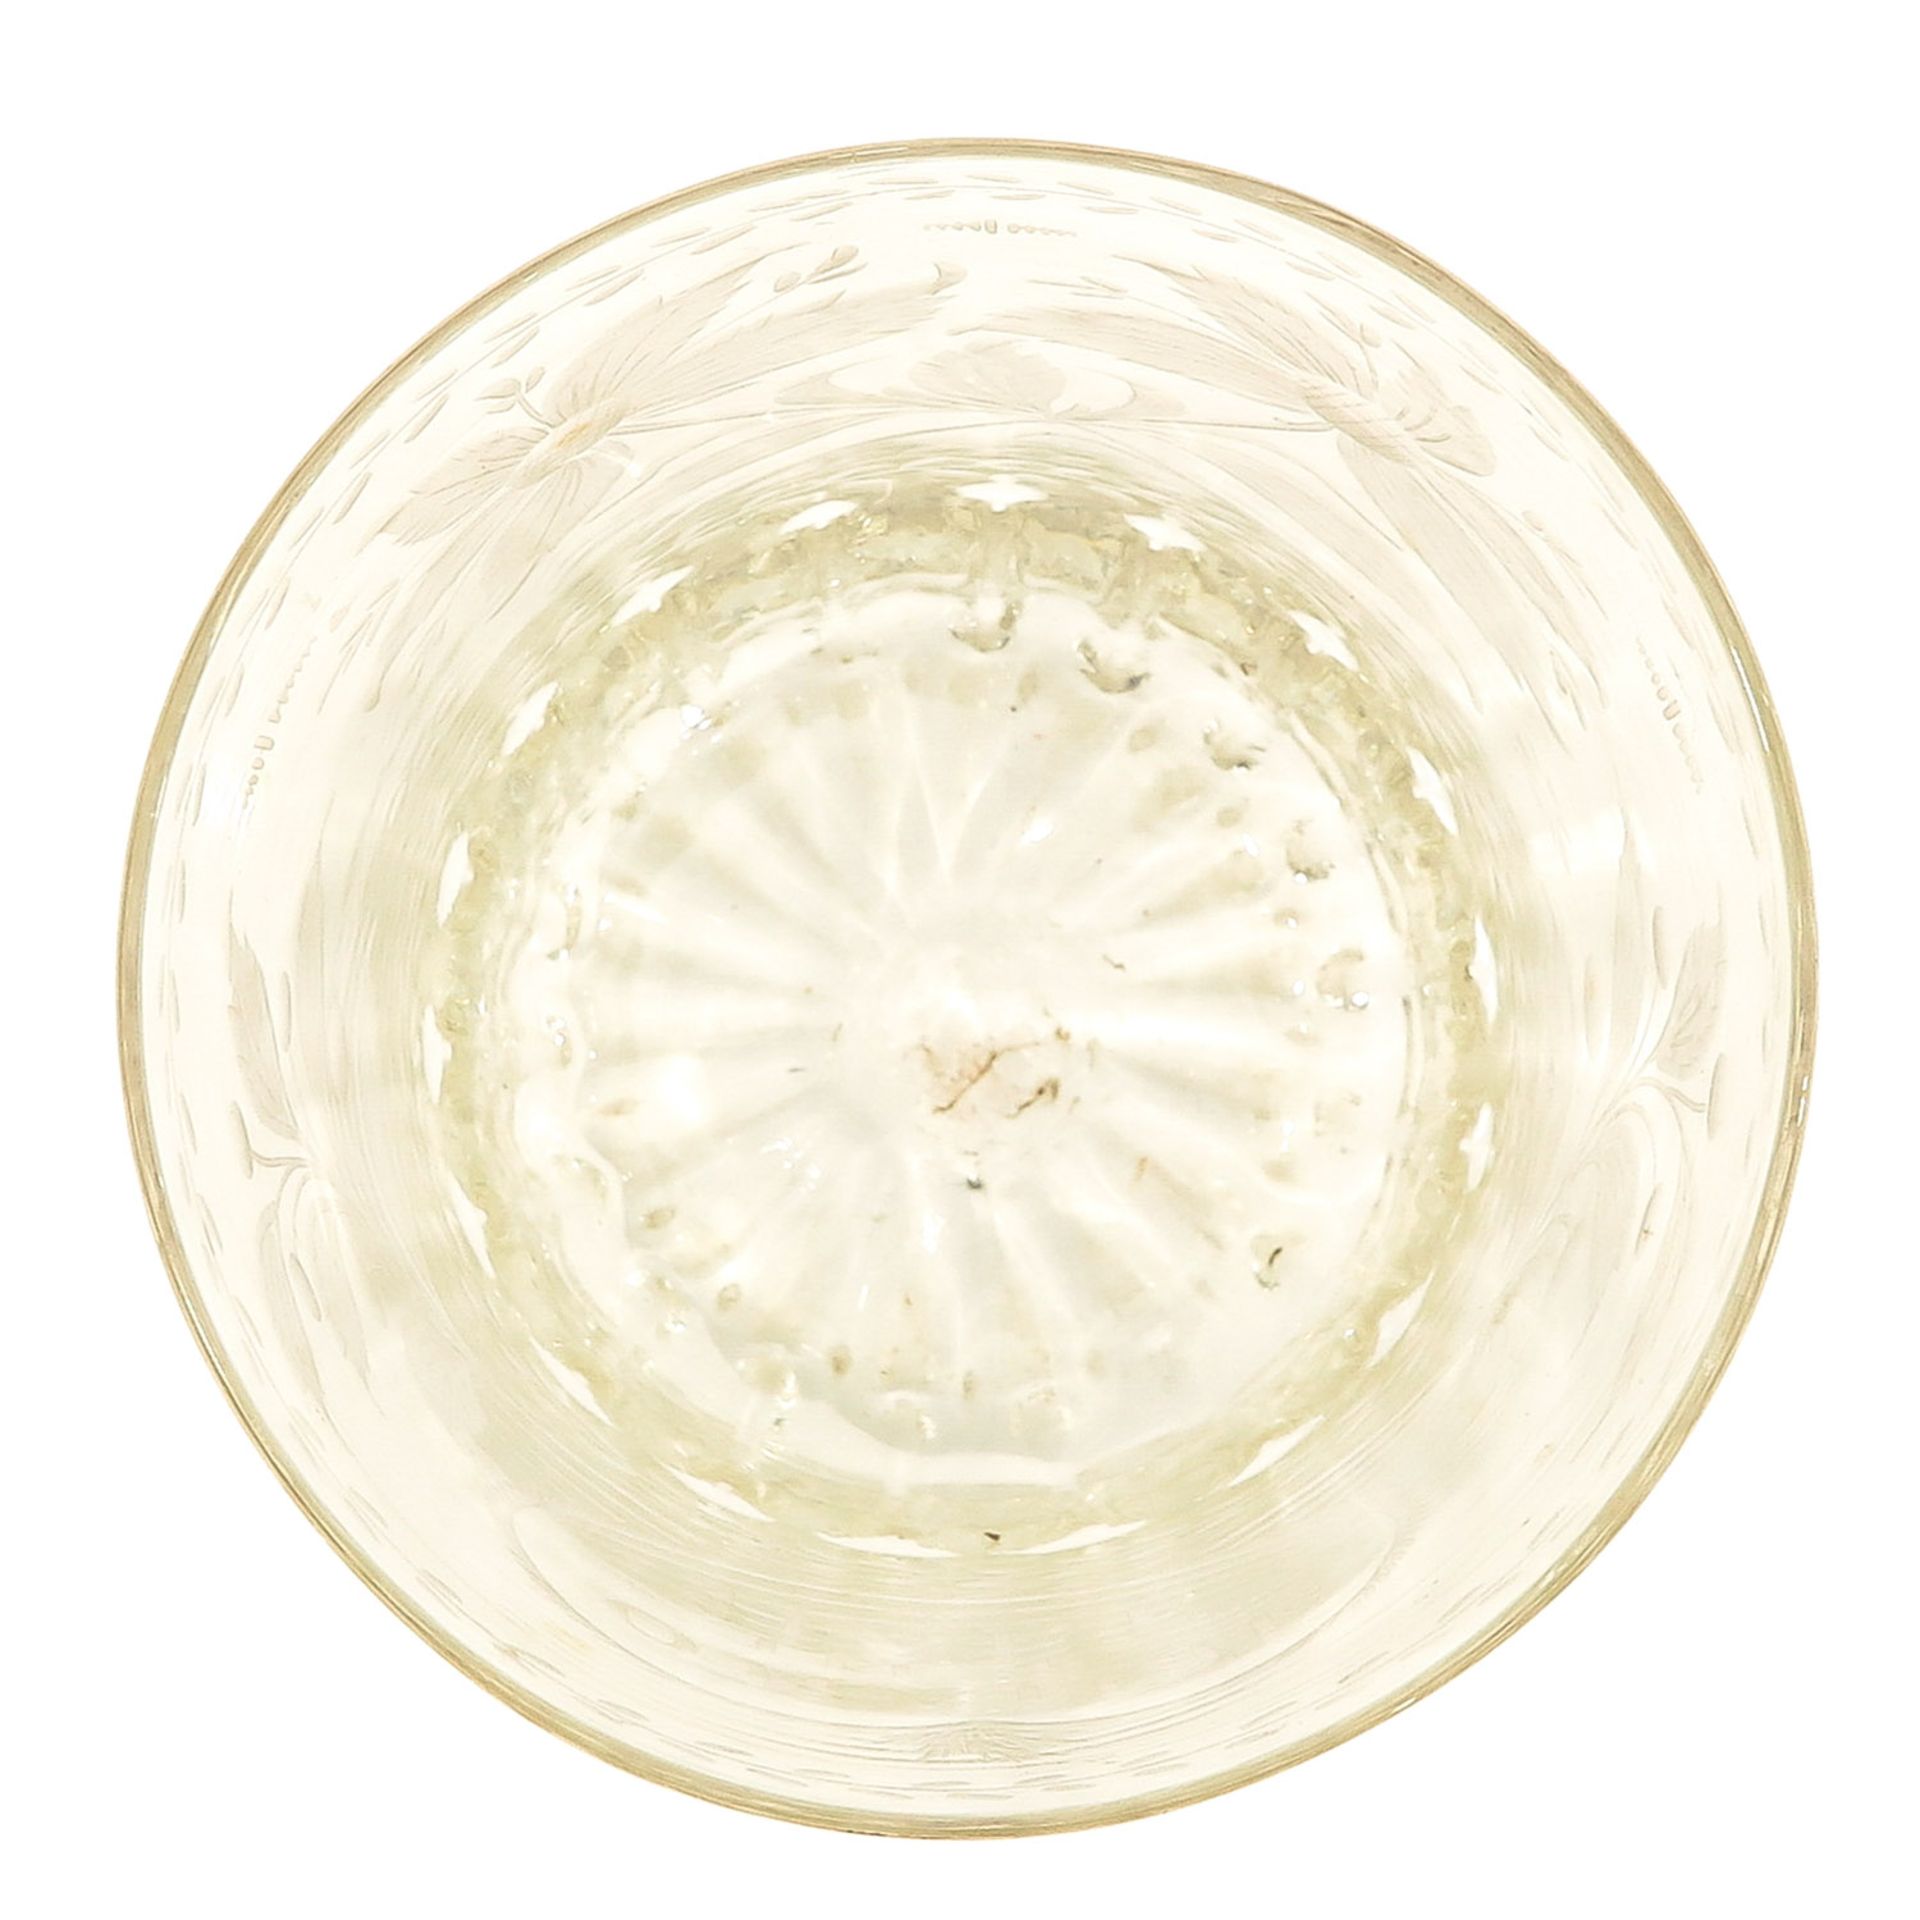 A Grape Rinsing Glass or Druivenspoelglas - Image 5 of 8